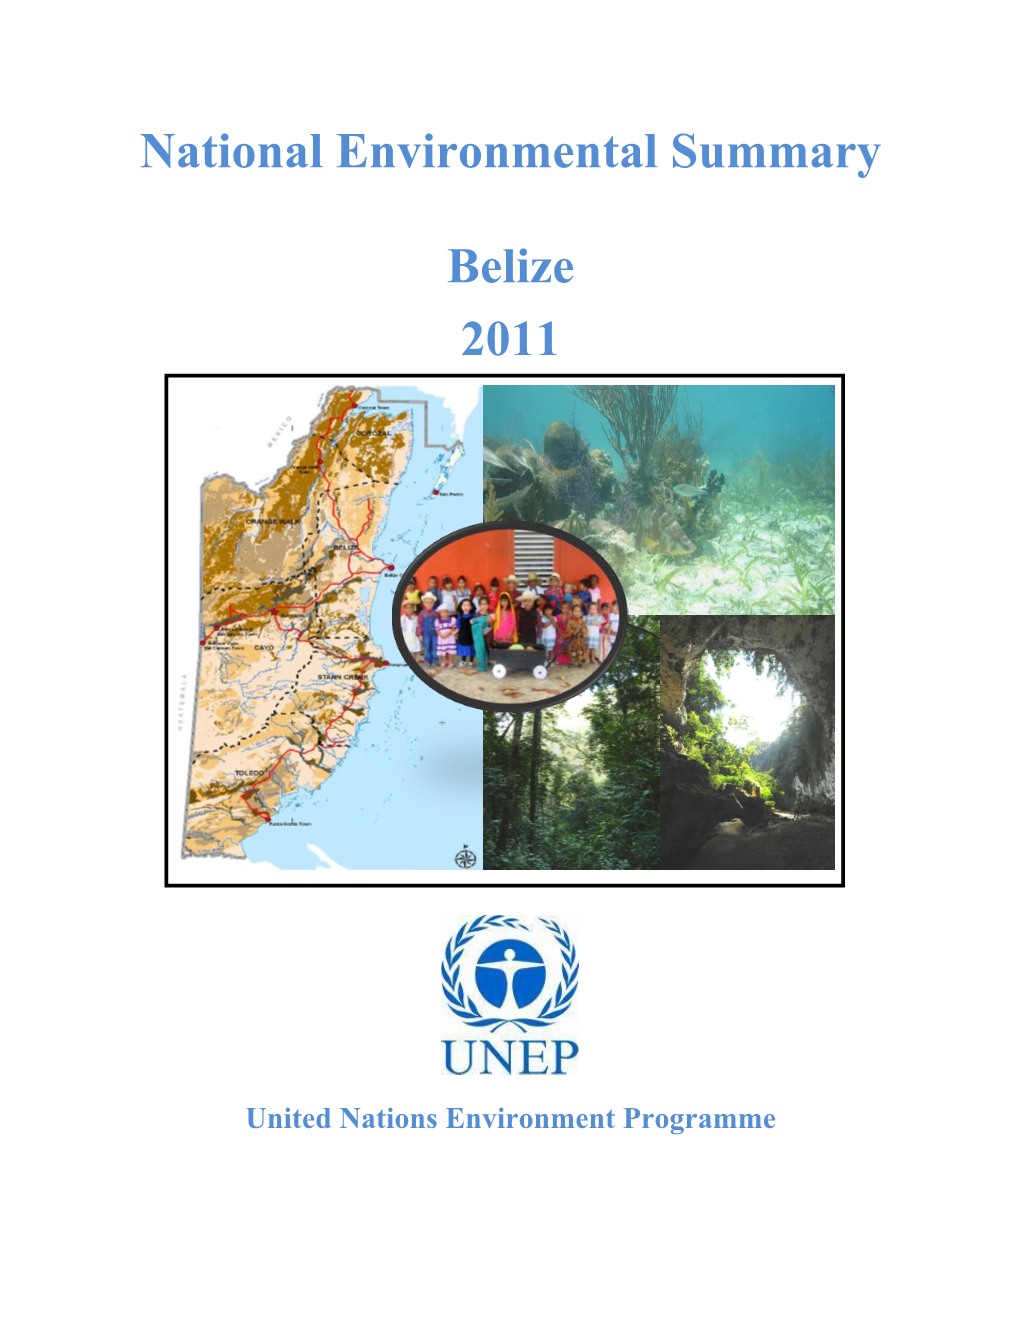 Belize National Environmental Summary